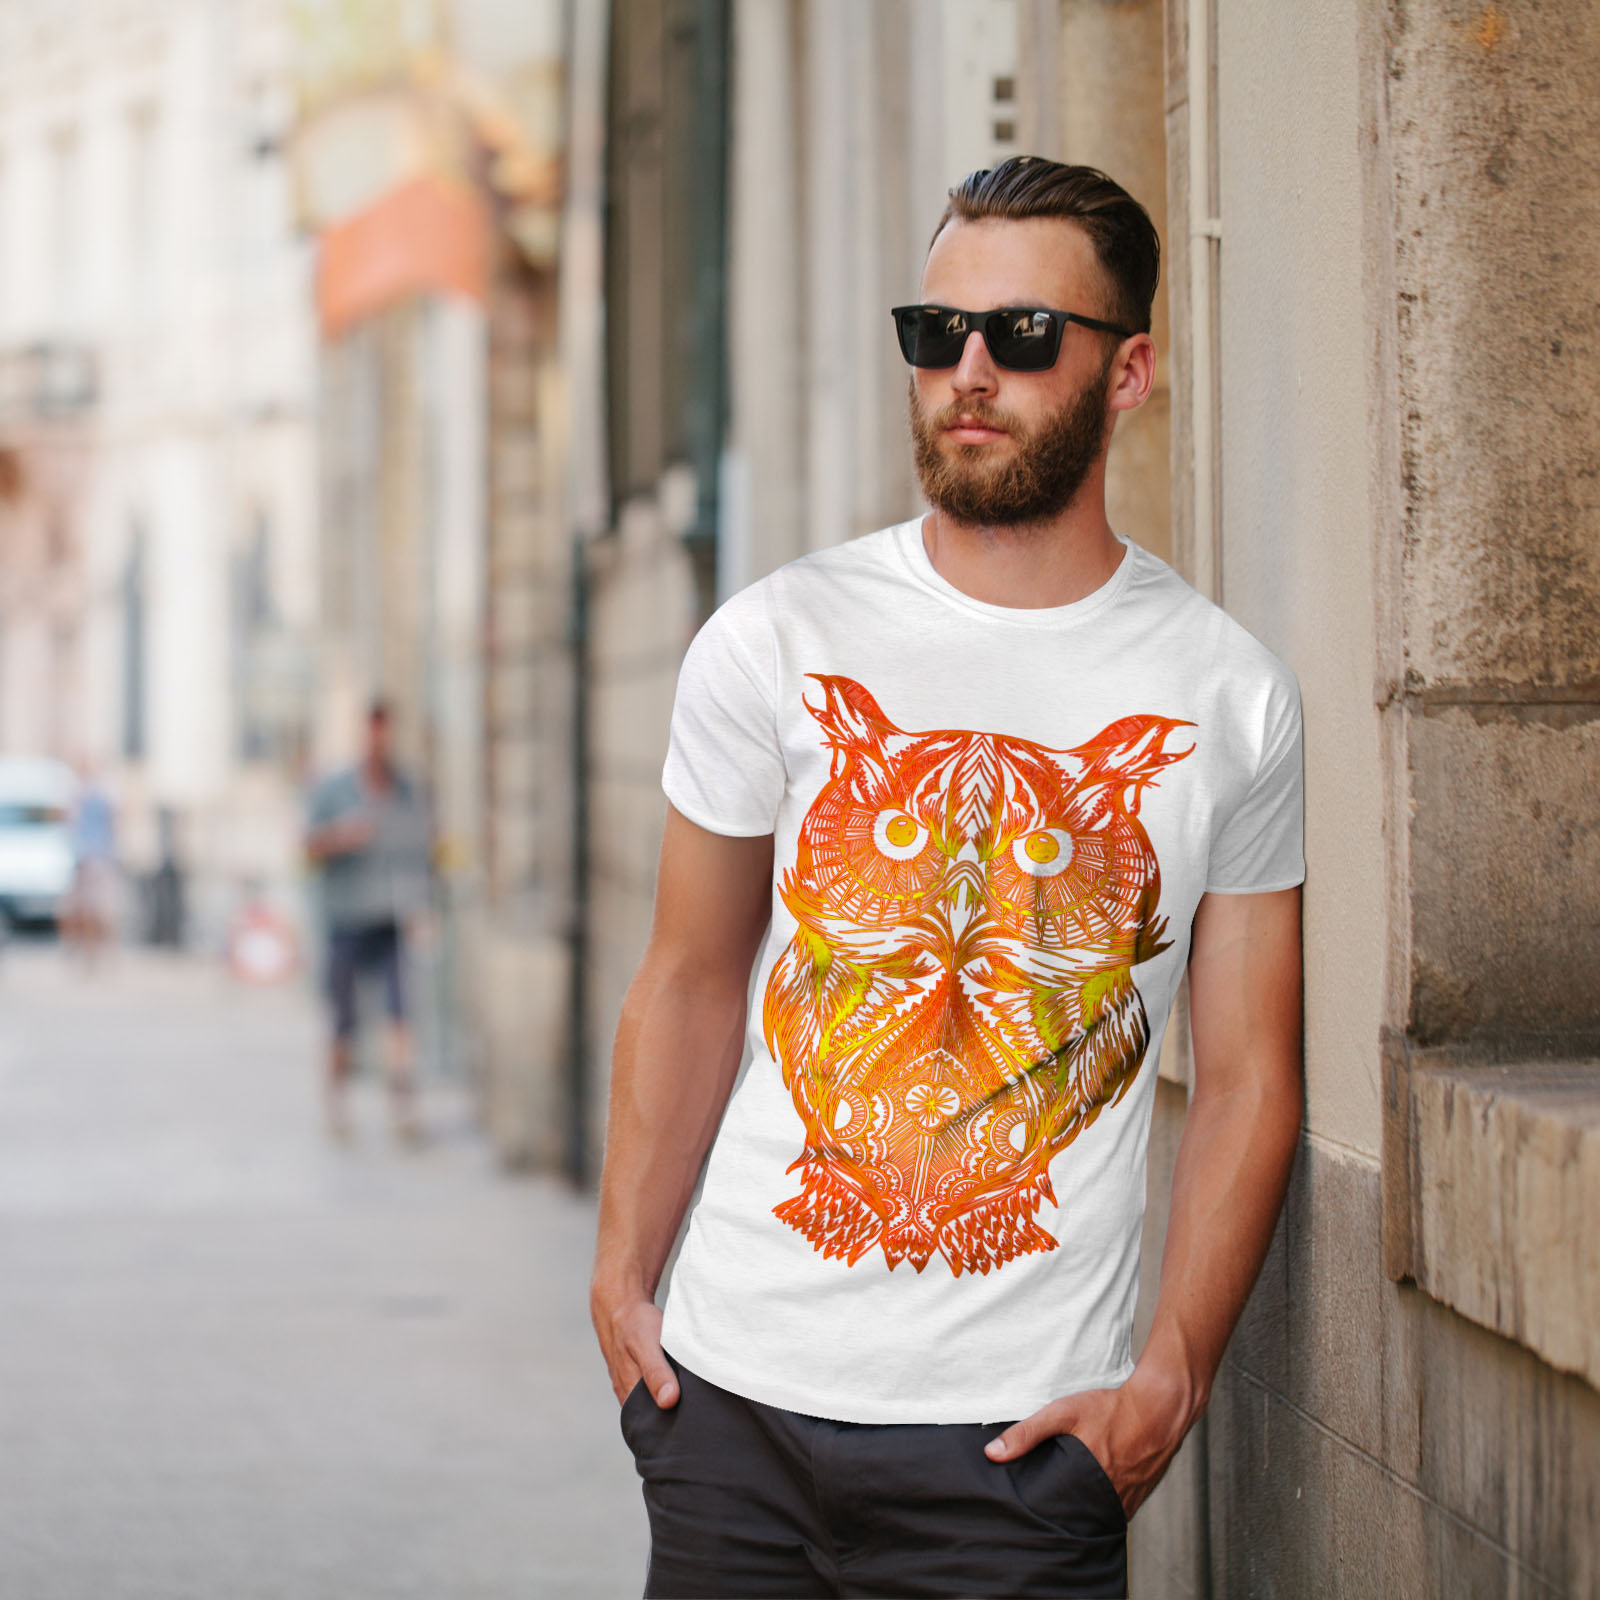 thumbnail 11  - Wellcoda Night Owl On Fire Mens T-shirt, Burning Graphic Design Printed Tee